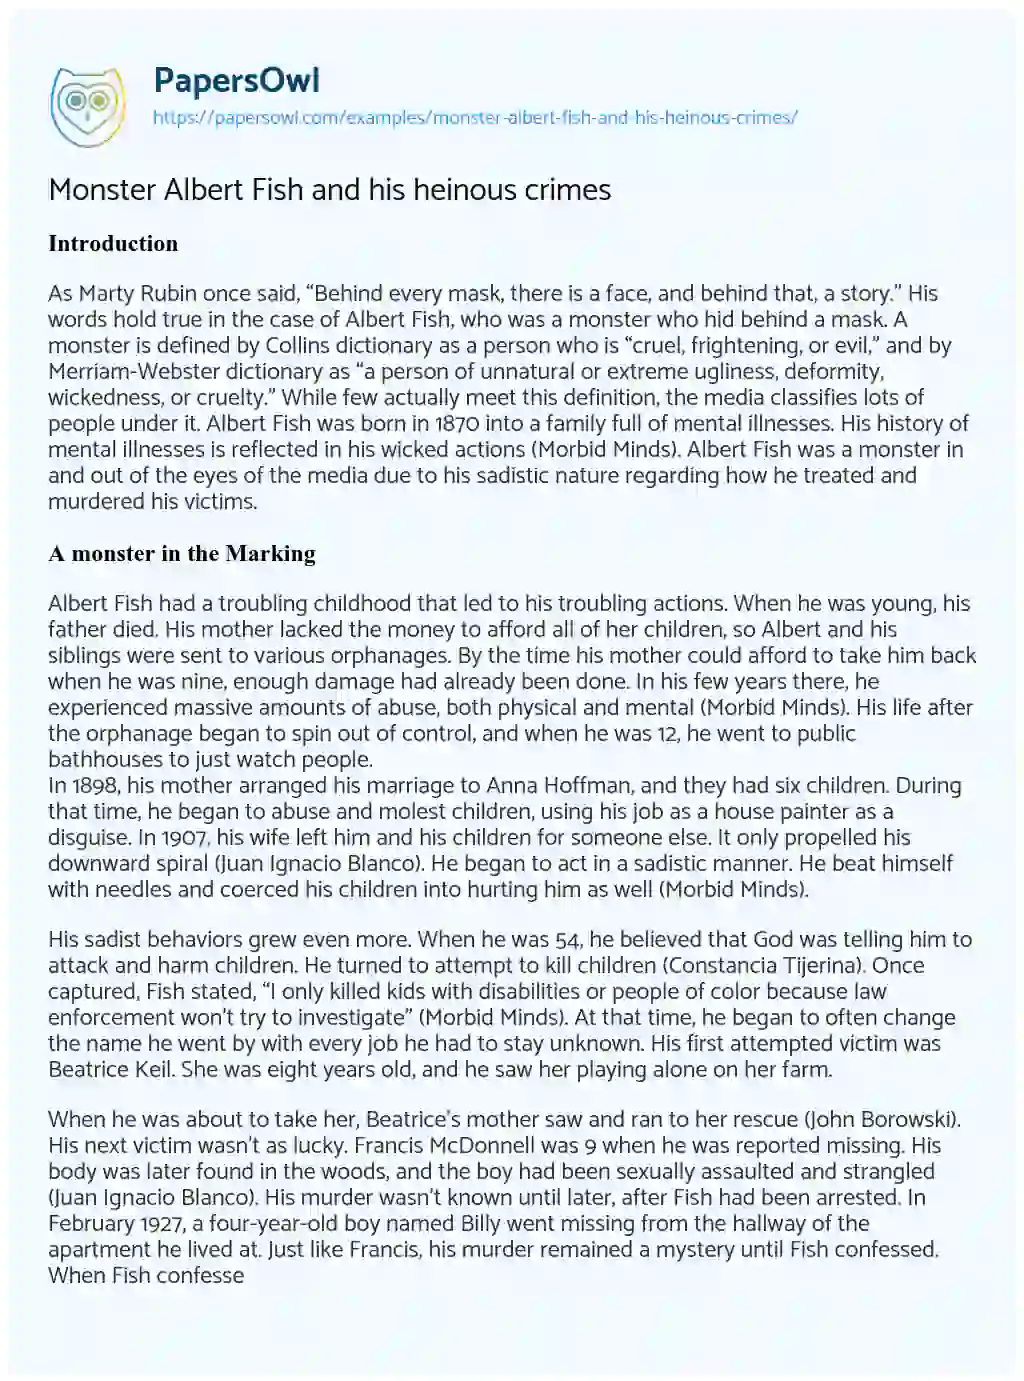 Monster Albert Fish and his Heinous Crimes essay